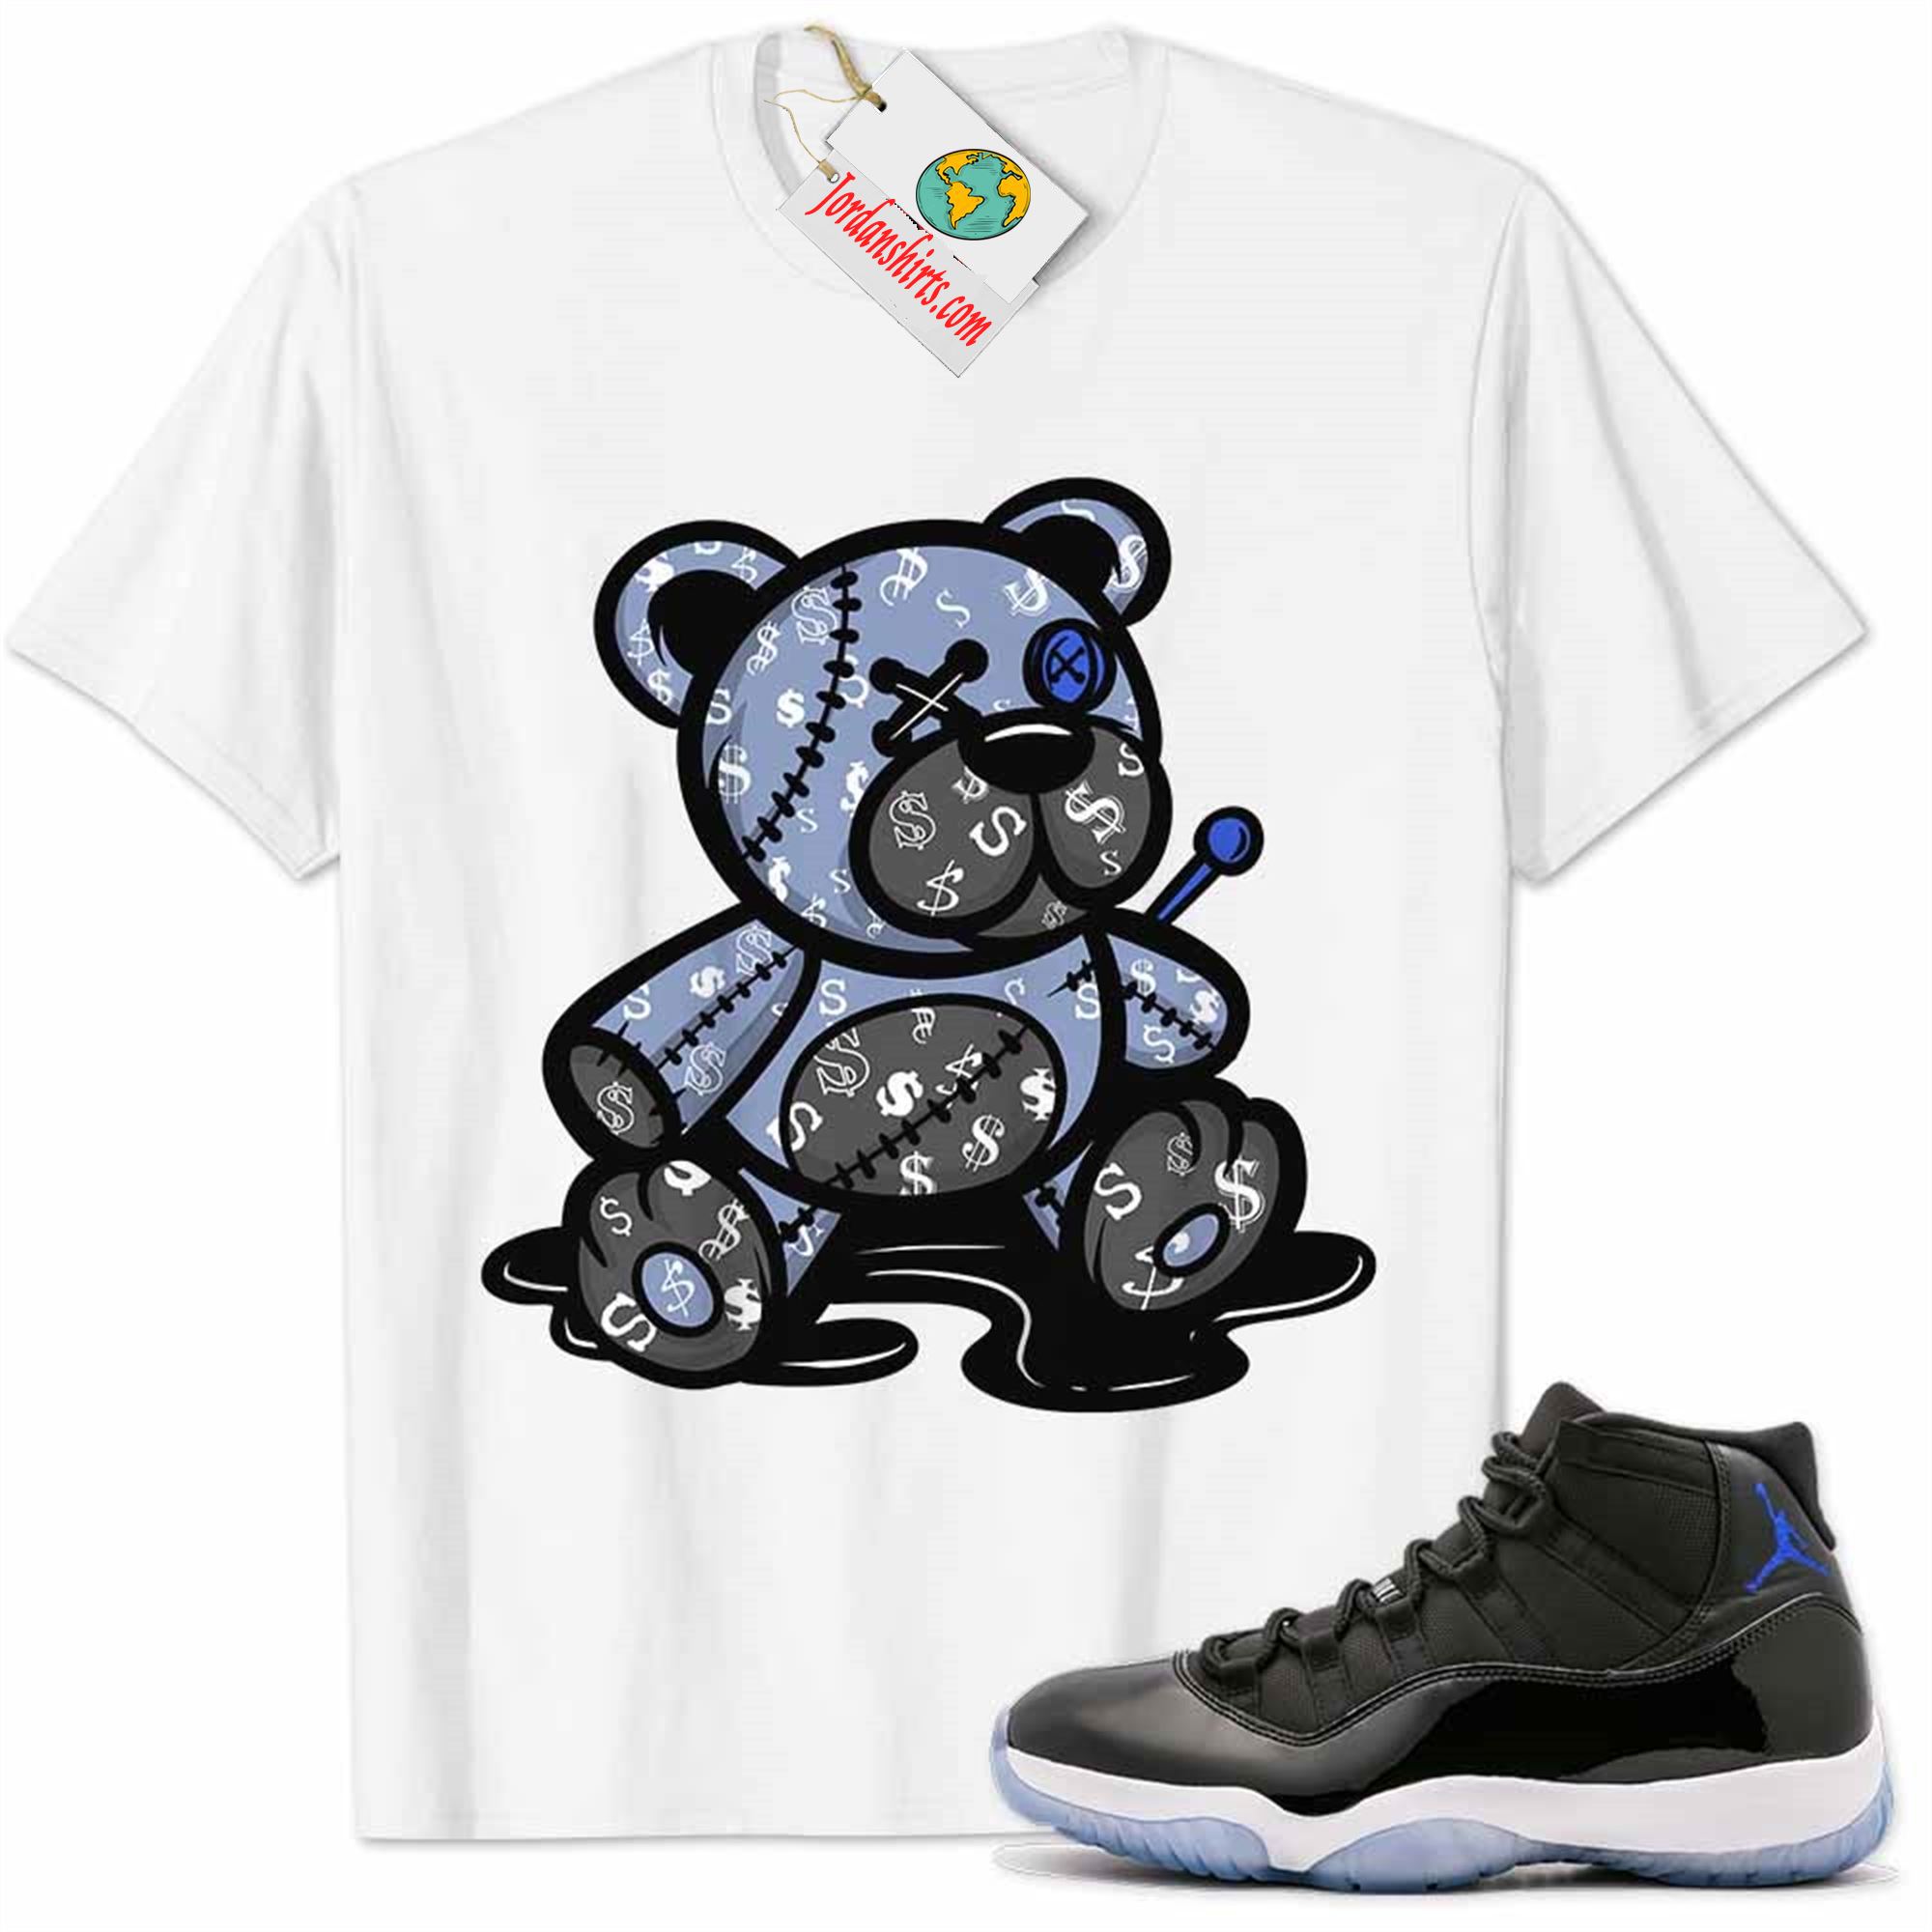 Jordan 11 Shirt, Jordan 11 Space Jam Shirt Teddy Bear All Money In White Size Up To 5xl